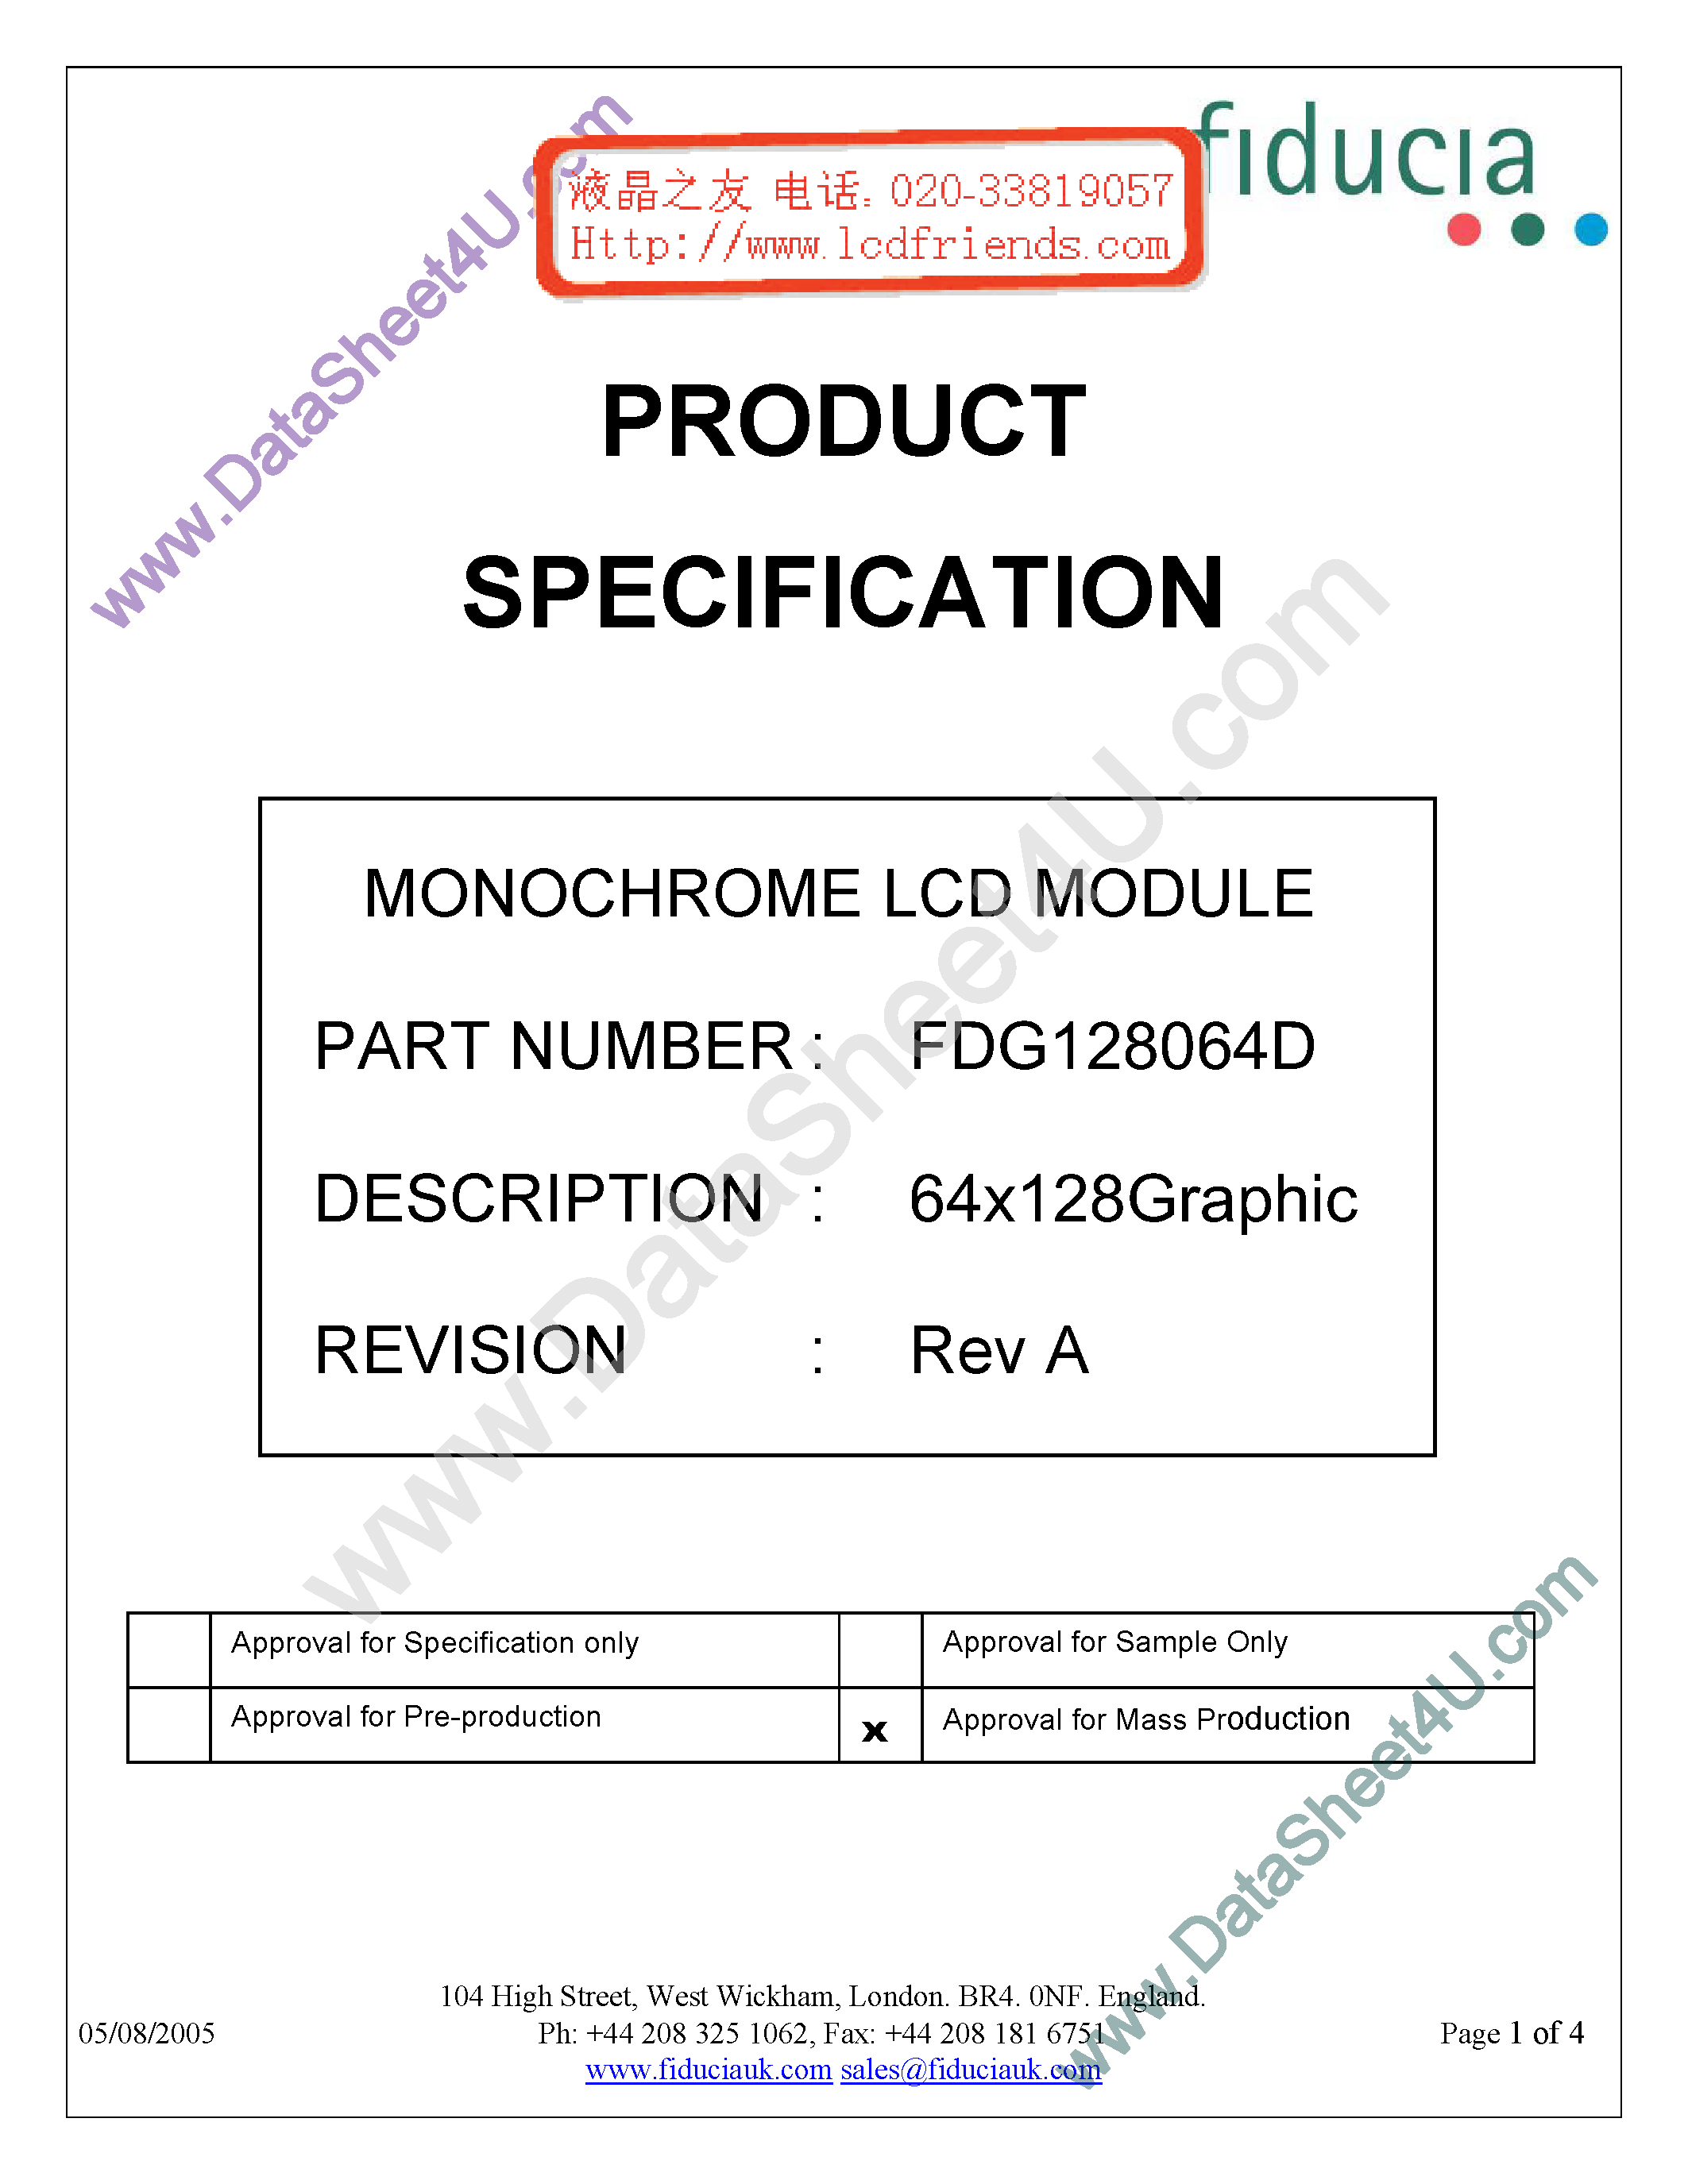 Даташит FDG128064D - Monochrome Lcd Module страница 1